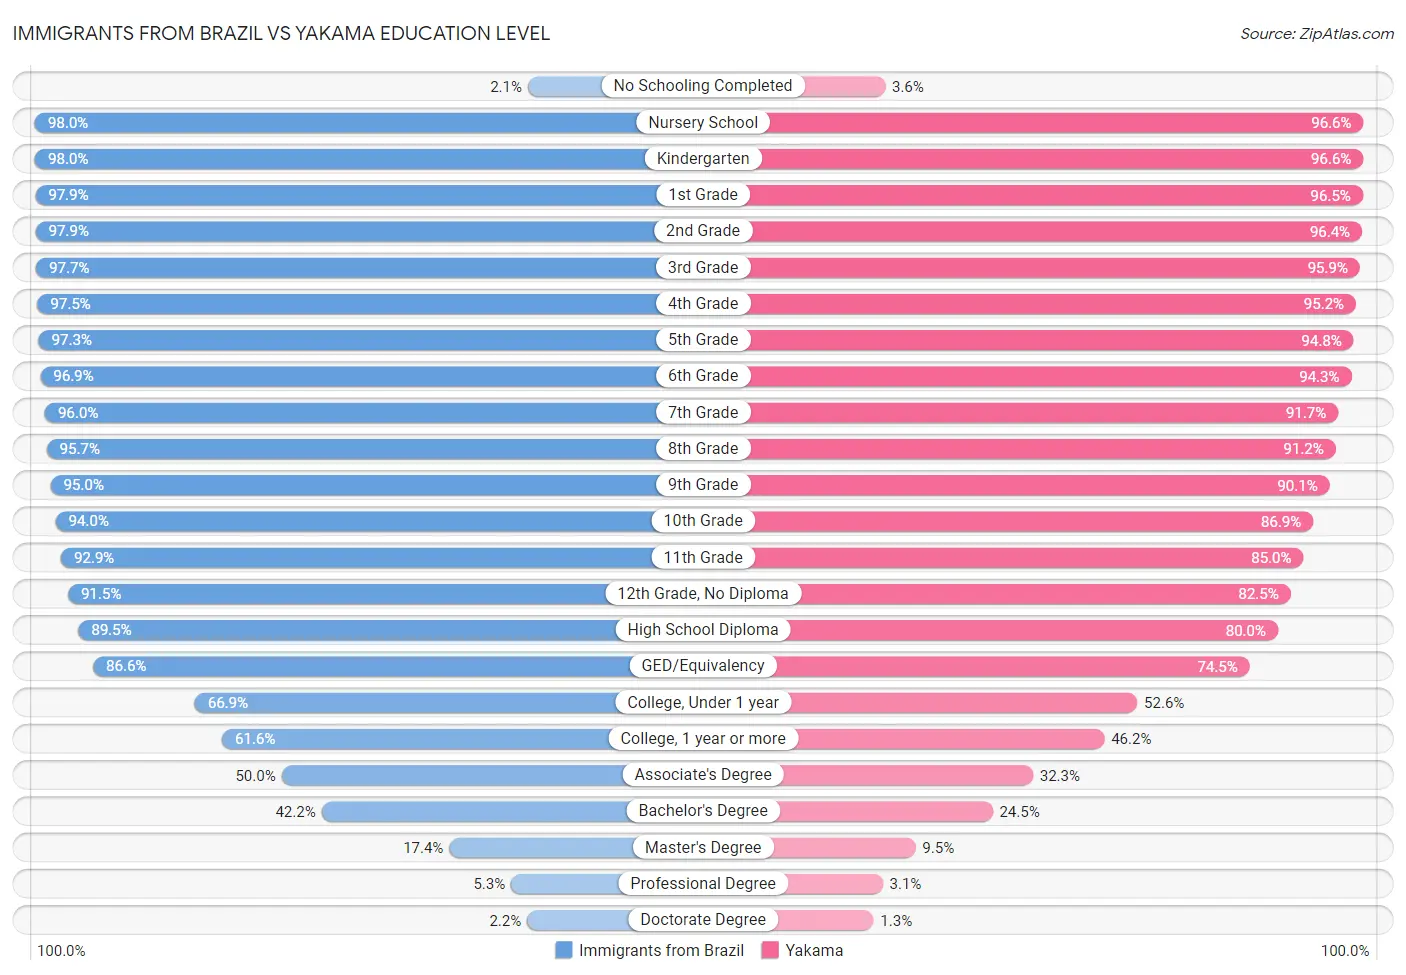 Immigrants from Brazil vs Yakama Education Level